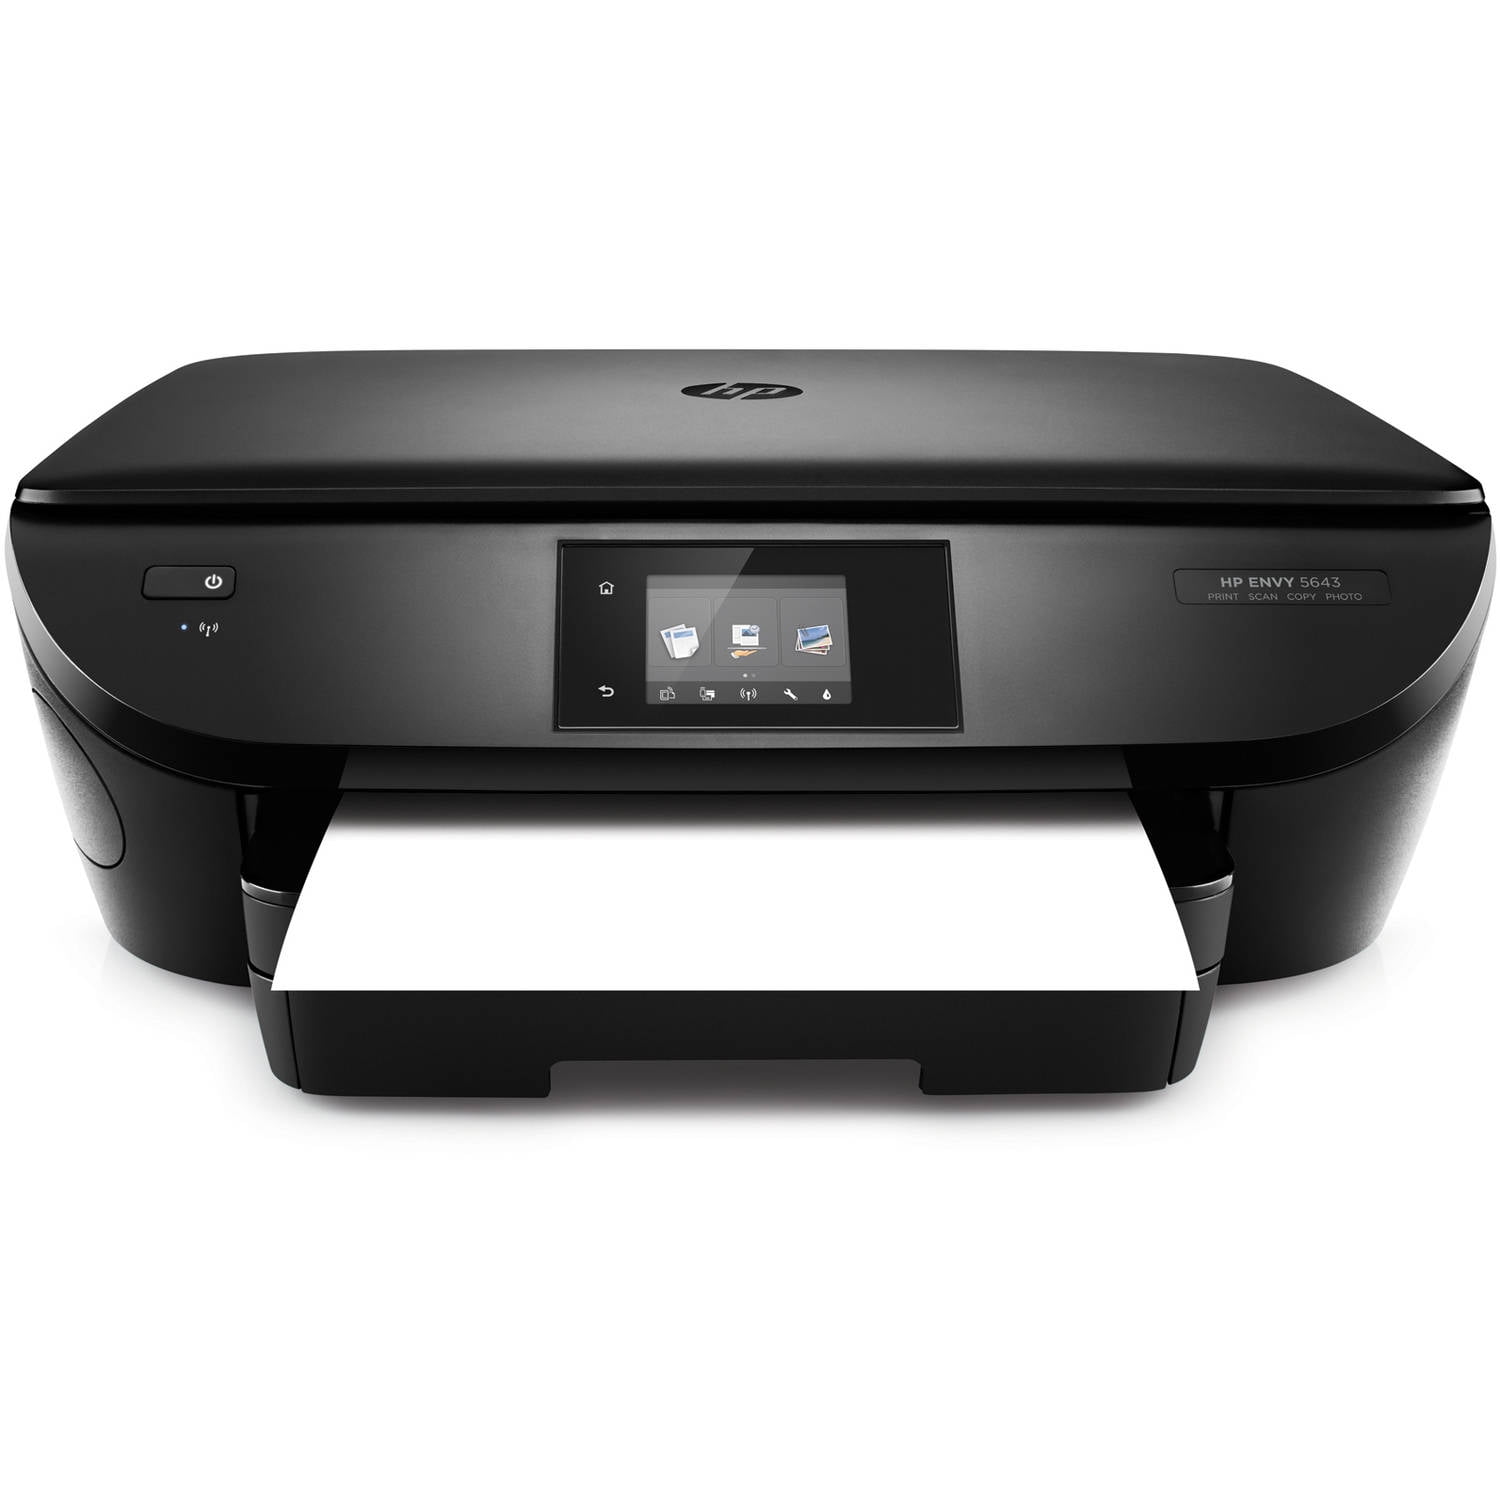 buy a printer scanner copier